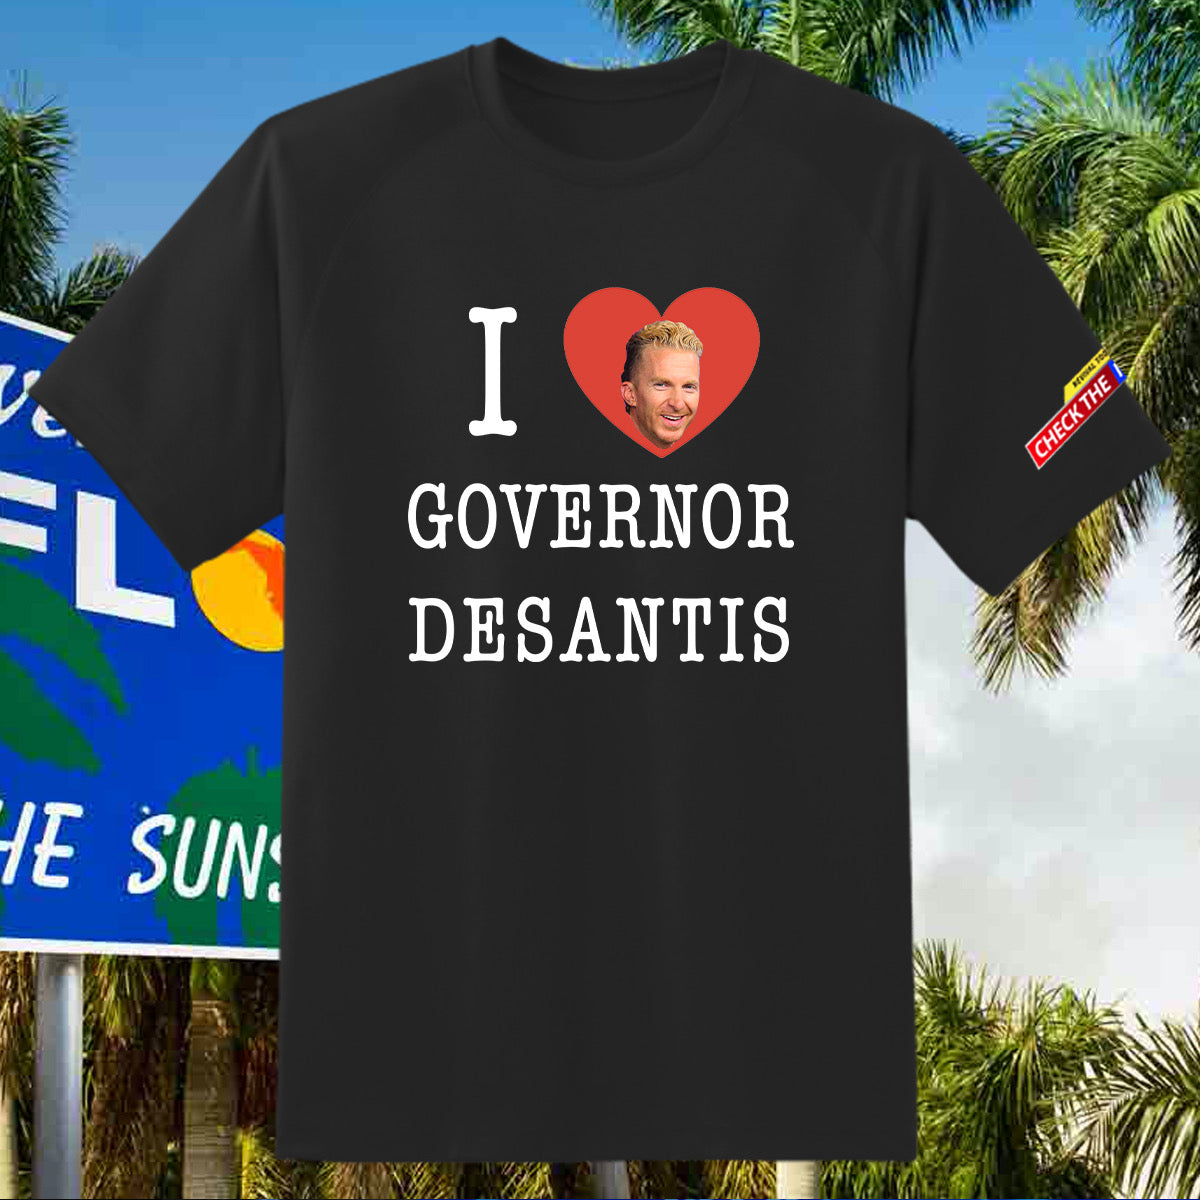 "I Heart Gov Desantis" T-Shirt